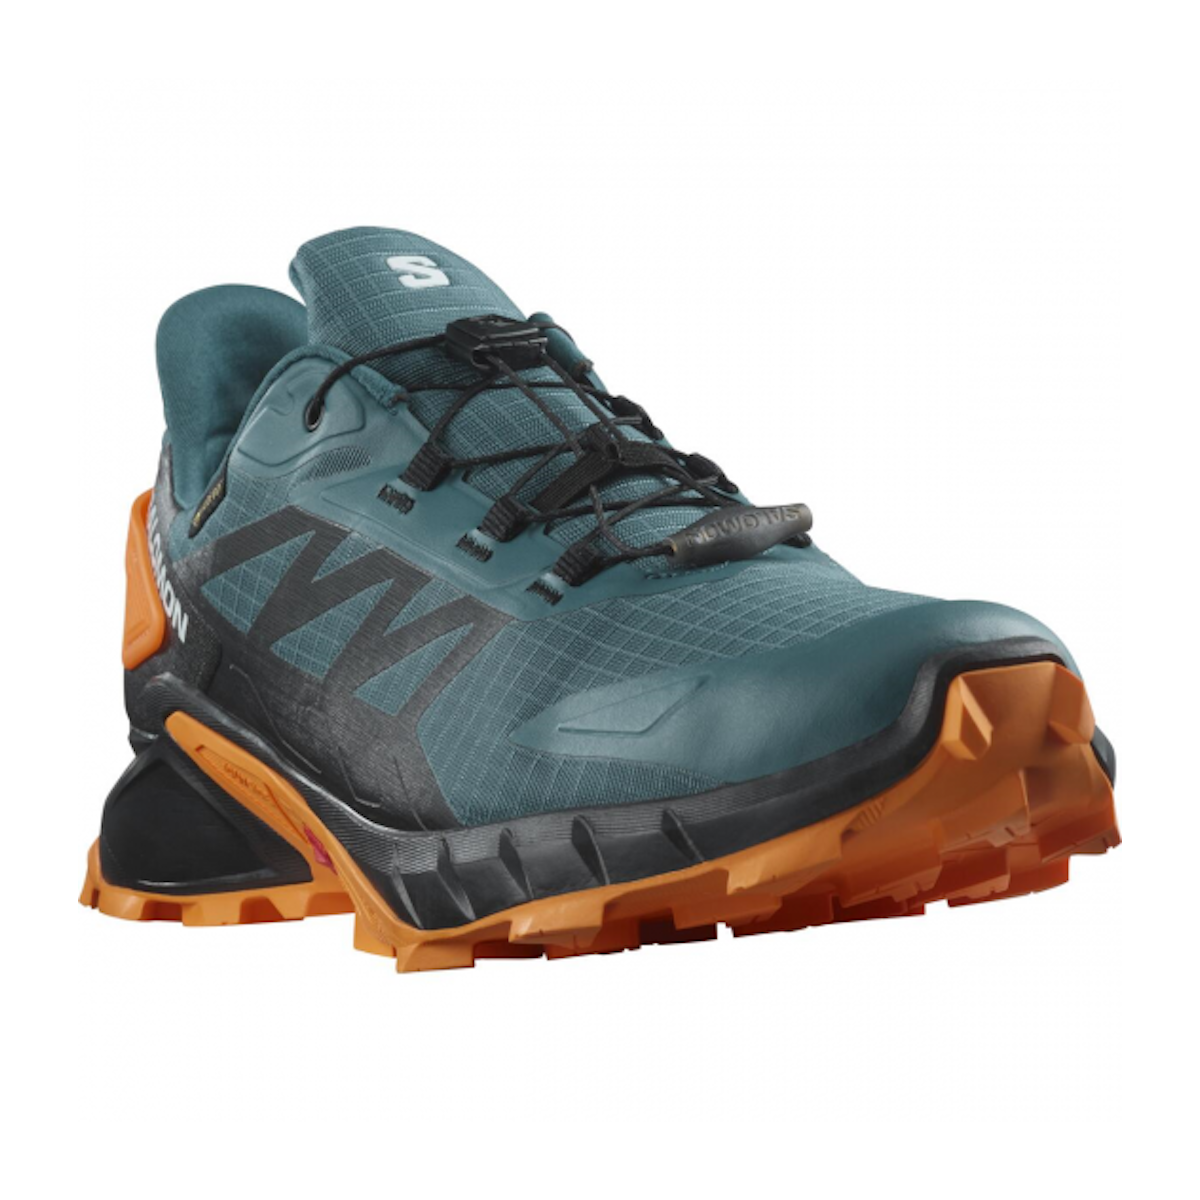 SALOMON SUPERCROSS 4 GTX trail running shoes - blue/black/orange